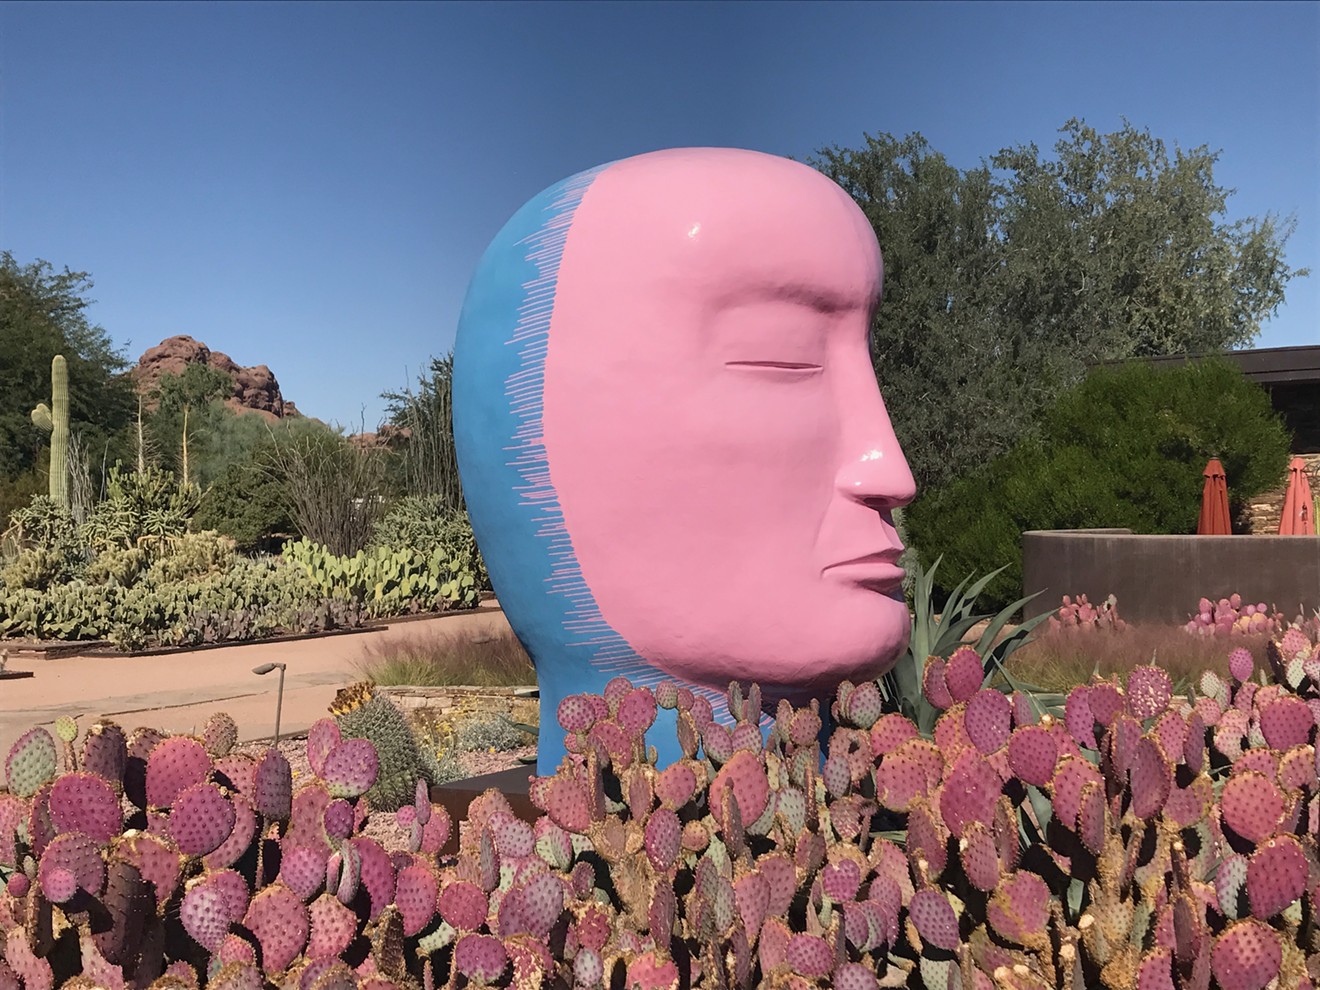 See Velocity by Jun Kaneko after you enter the Desert Botanical Garden.